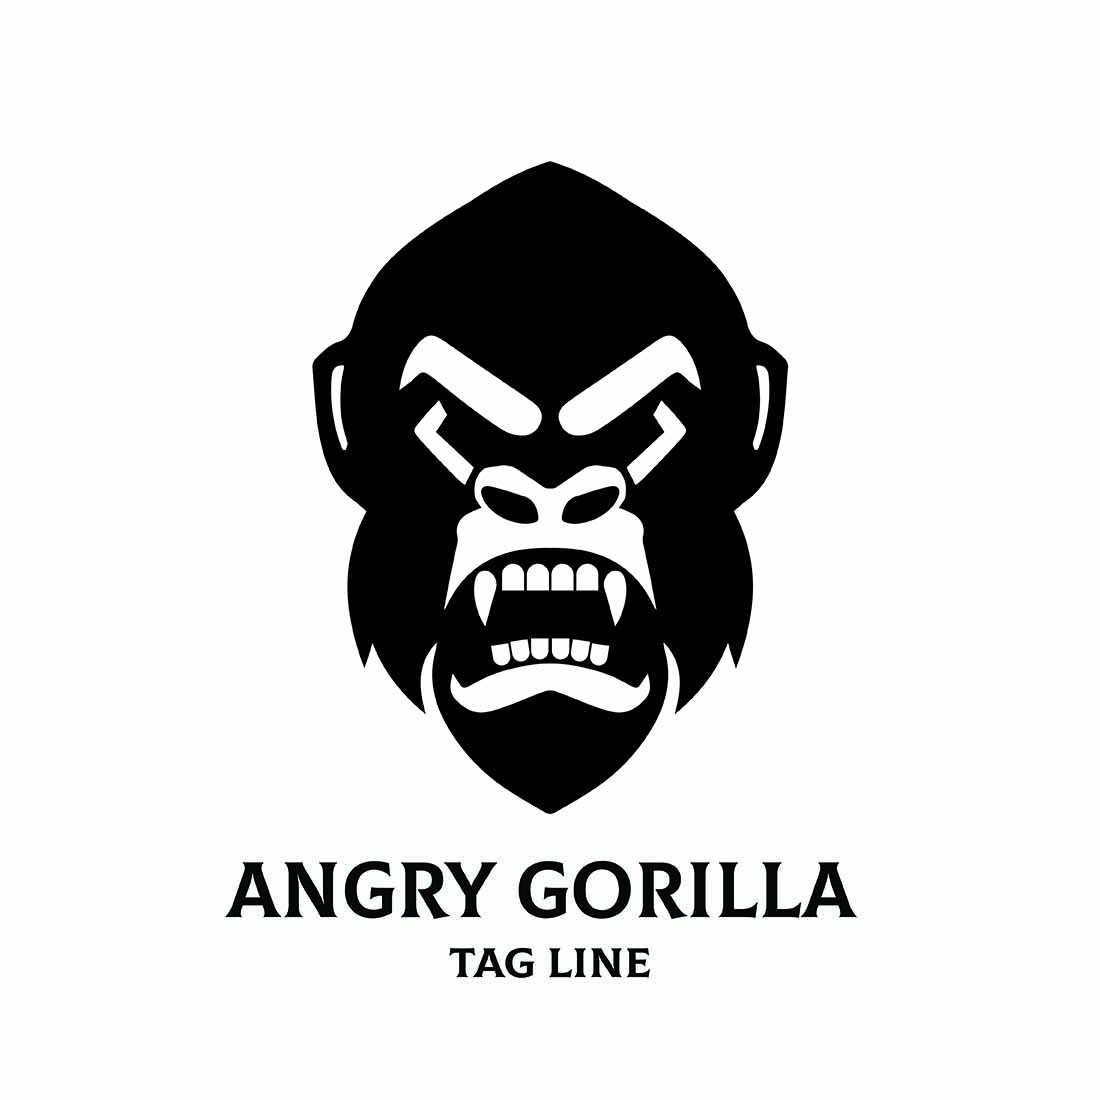 Gorilla Tag SVG PNG